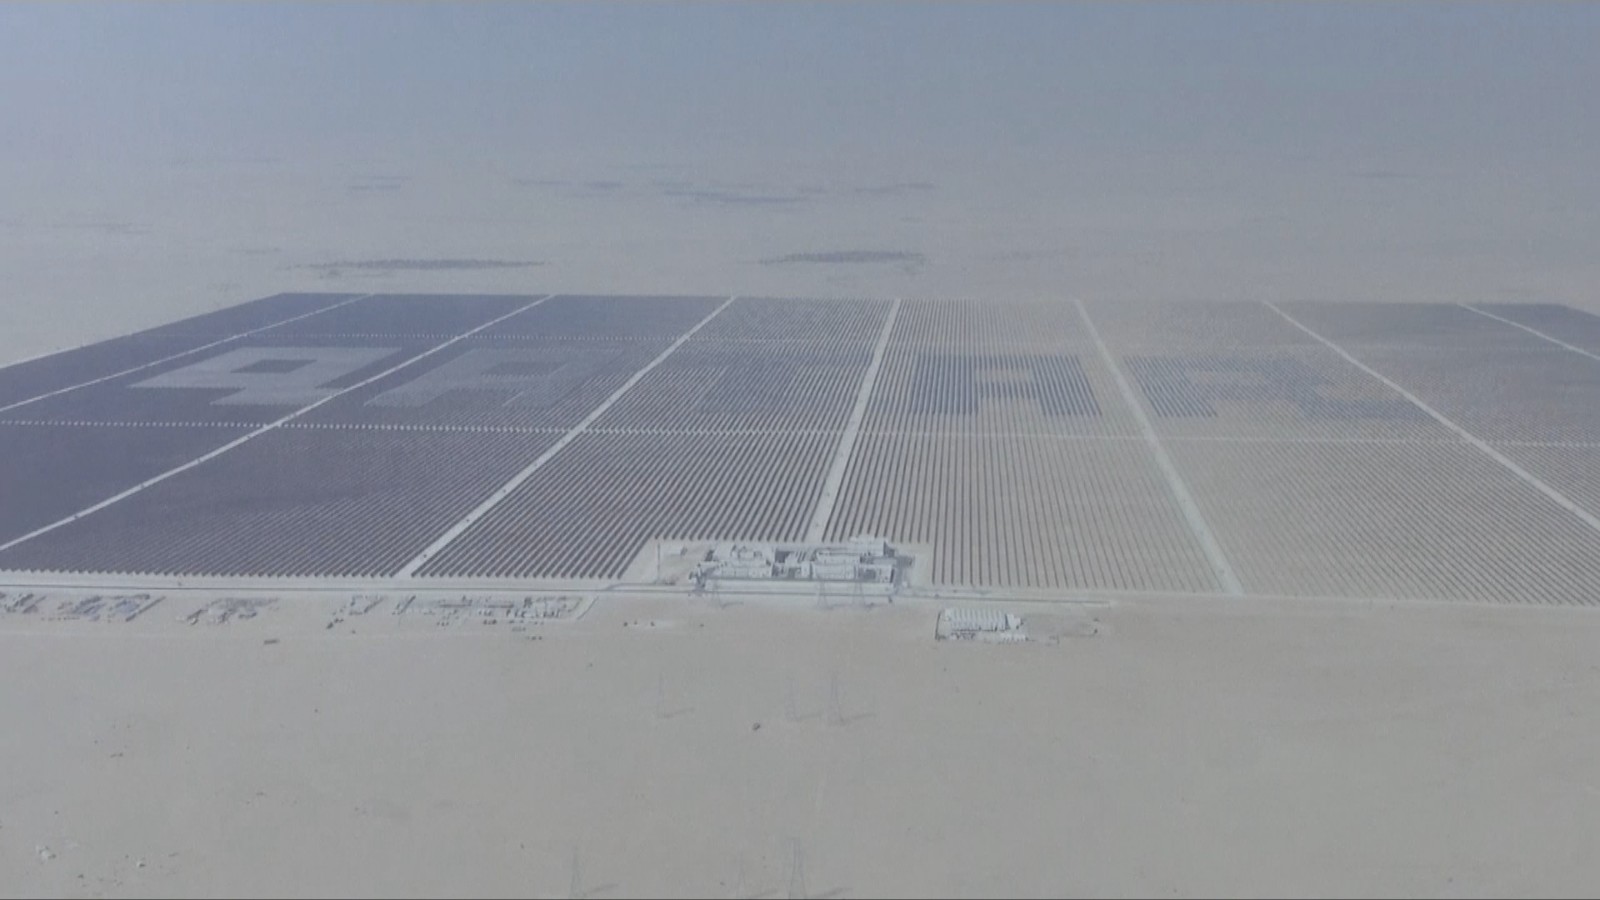 Qatar's 800-megawatt Al Kharsaah solar power plant located in the desert area about 80 kilometers west of its capital Doha. /CGTN